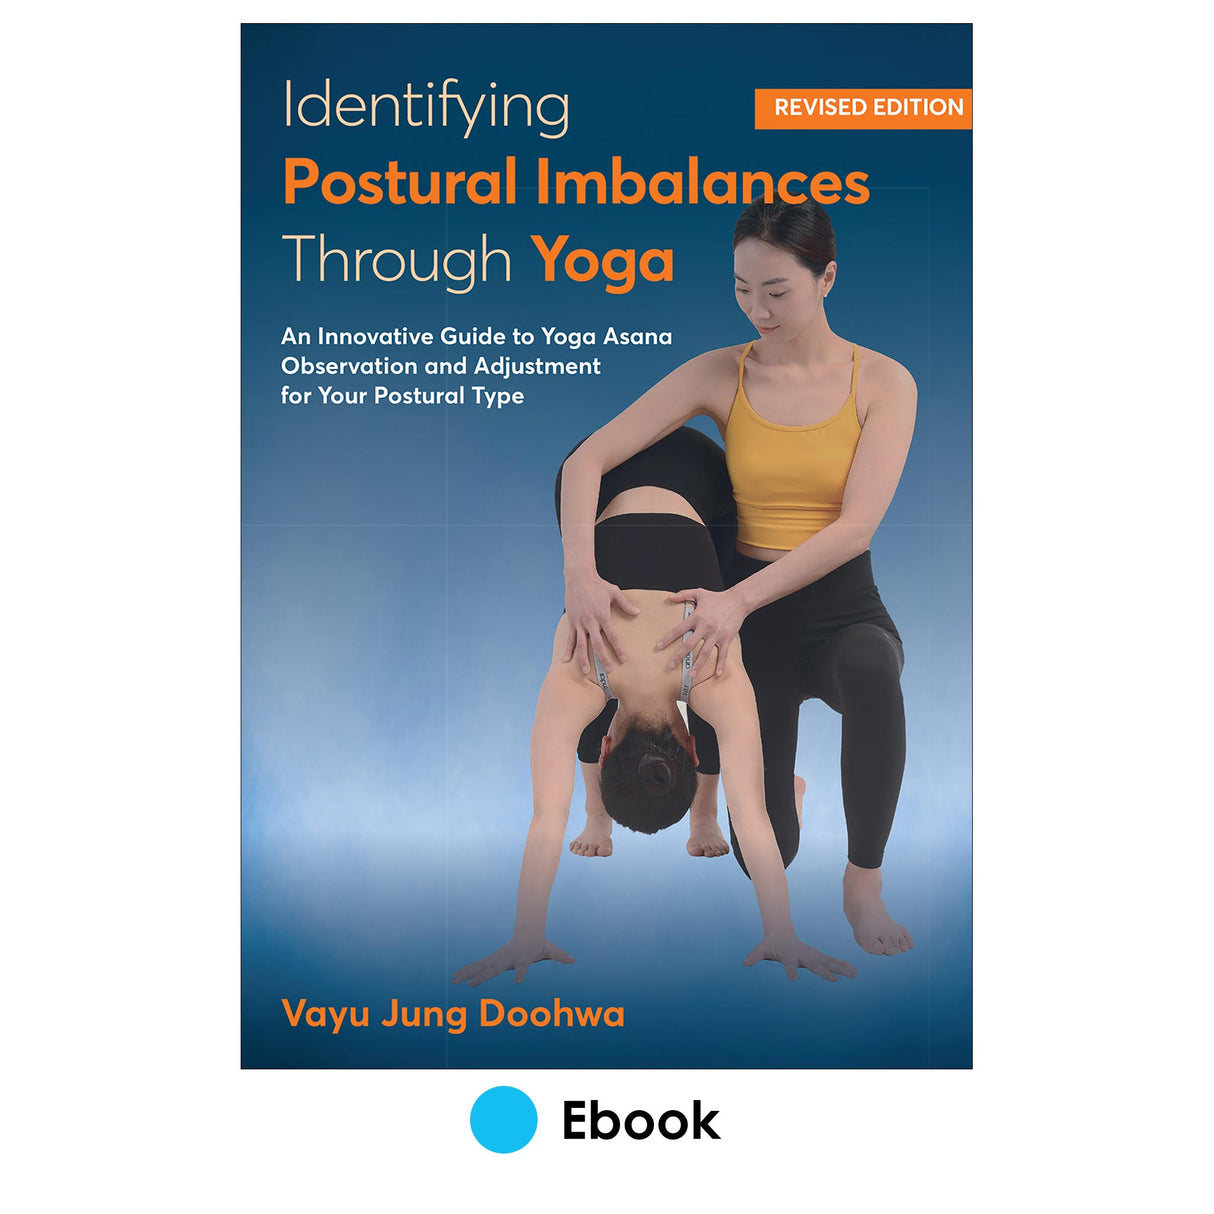 Identifying Postural Imbalances Through Yoga Revised Edition epub